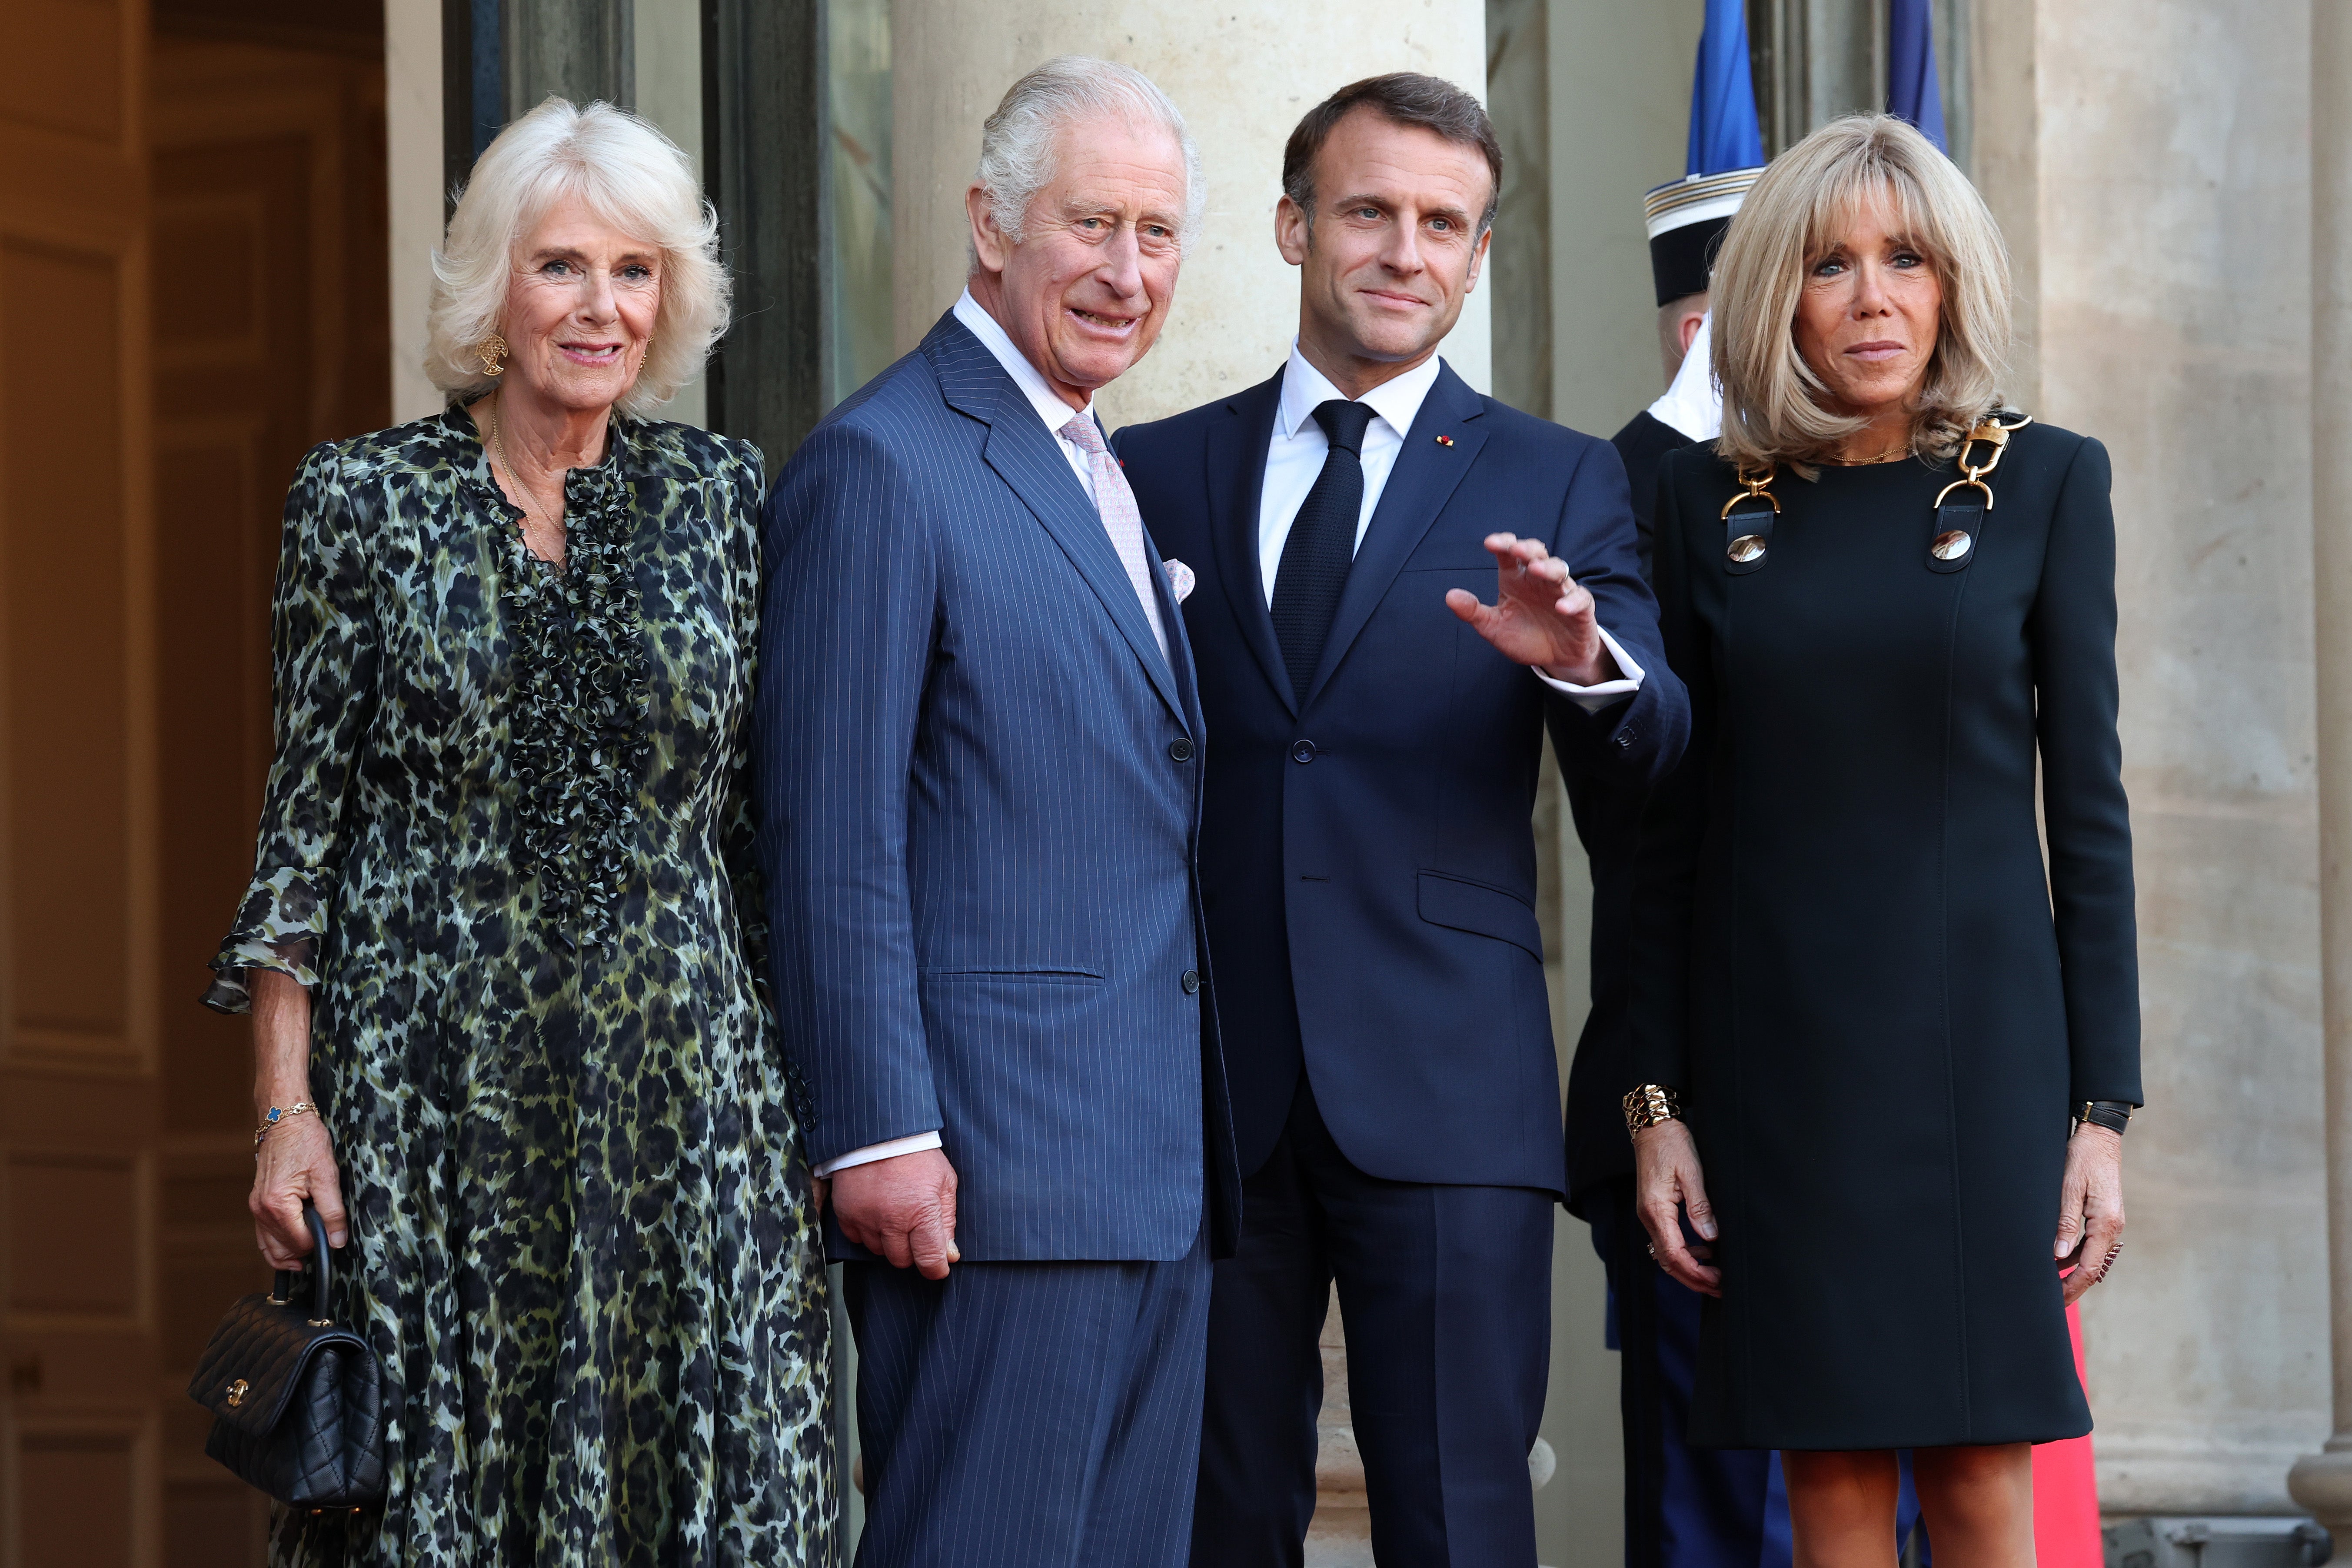 Camilla, Charles, and the Macrons at the Elysee Palace on Thursday